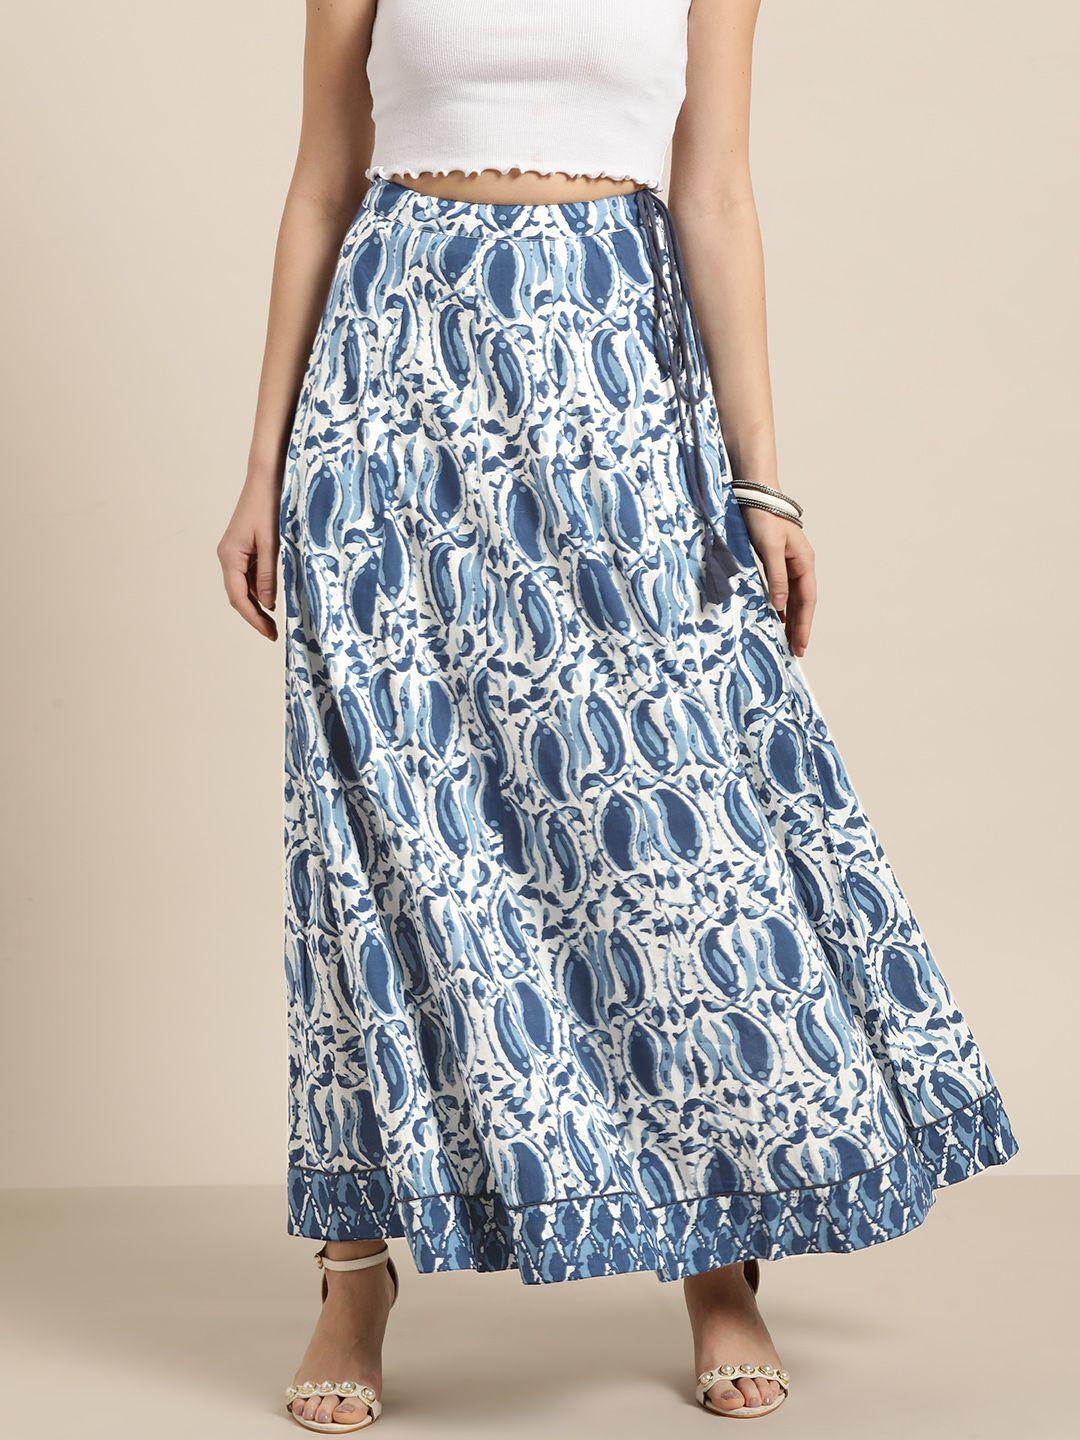 shae-by-sassafras-women-white-&-blue-paisley-print-maxi-flared-skirt